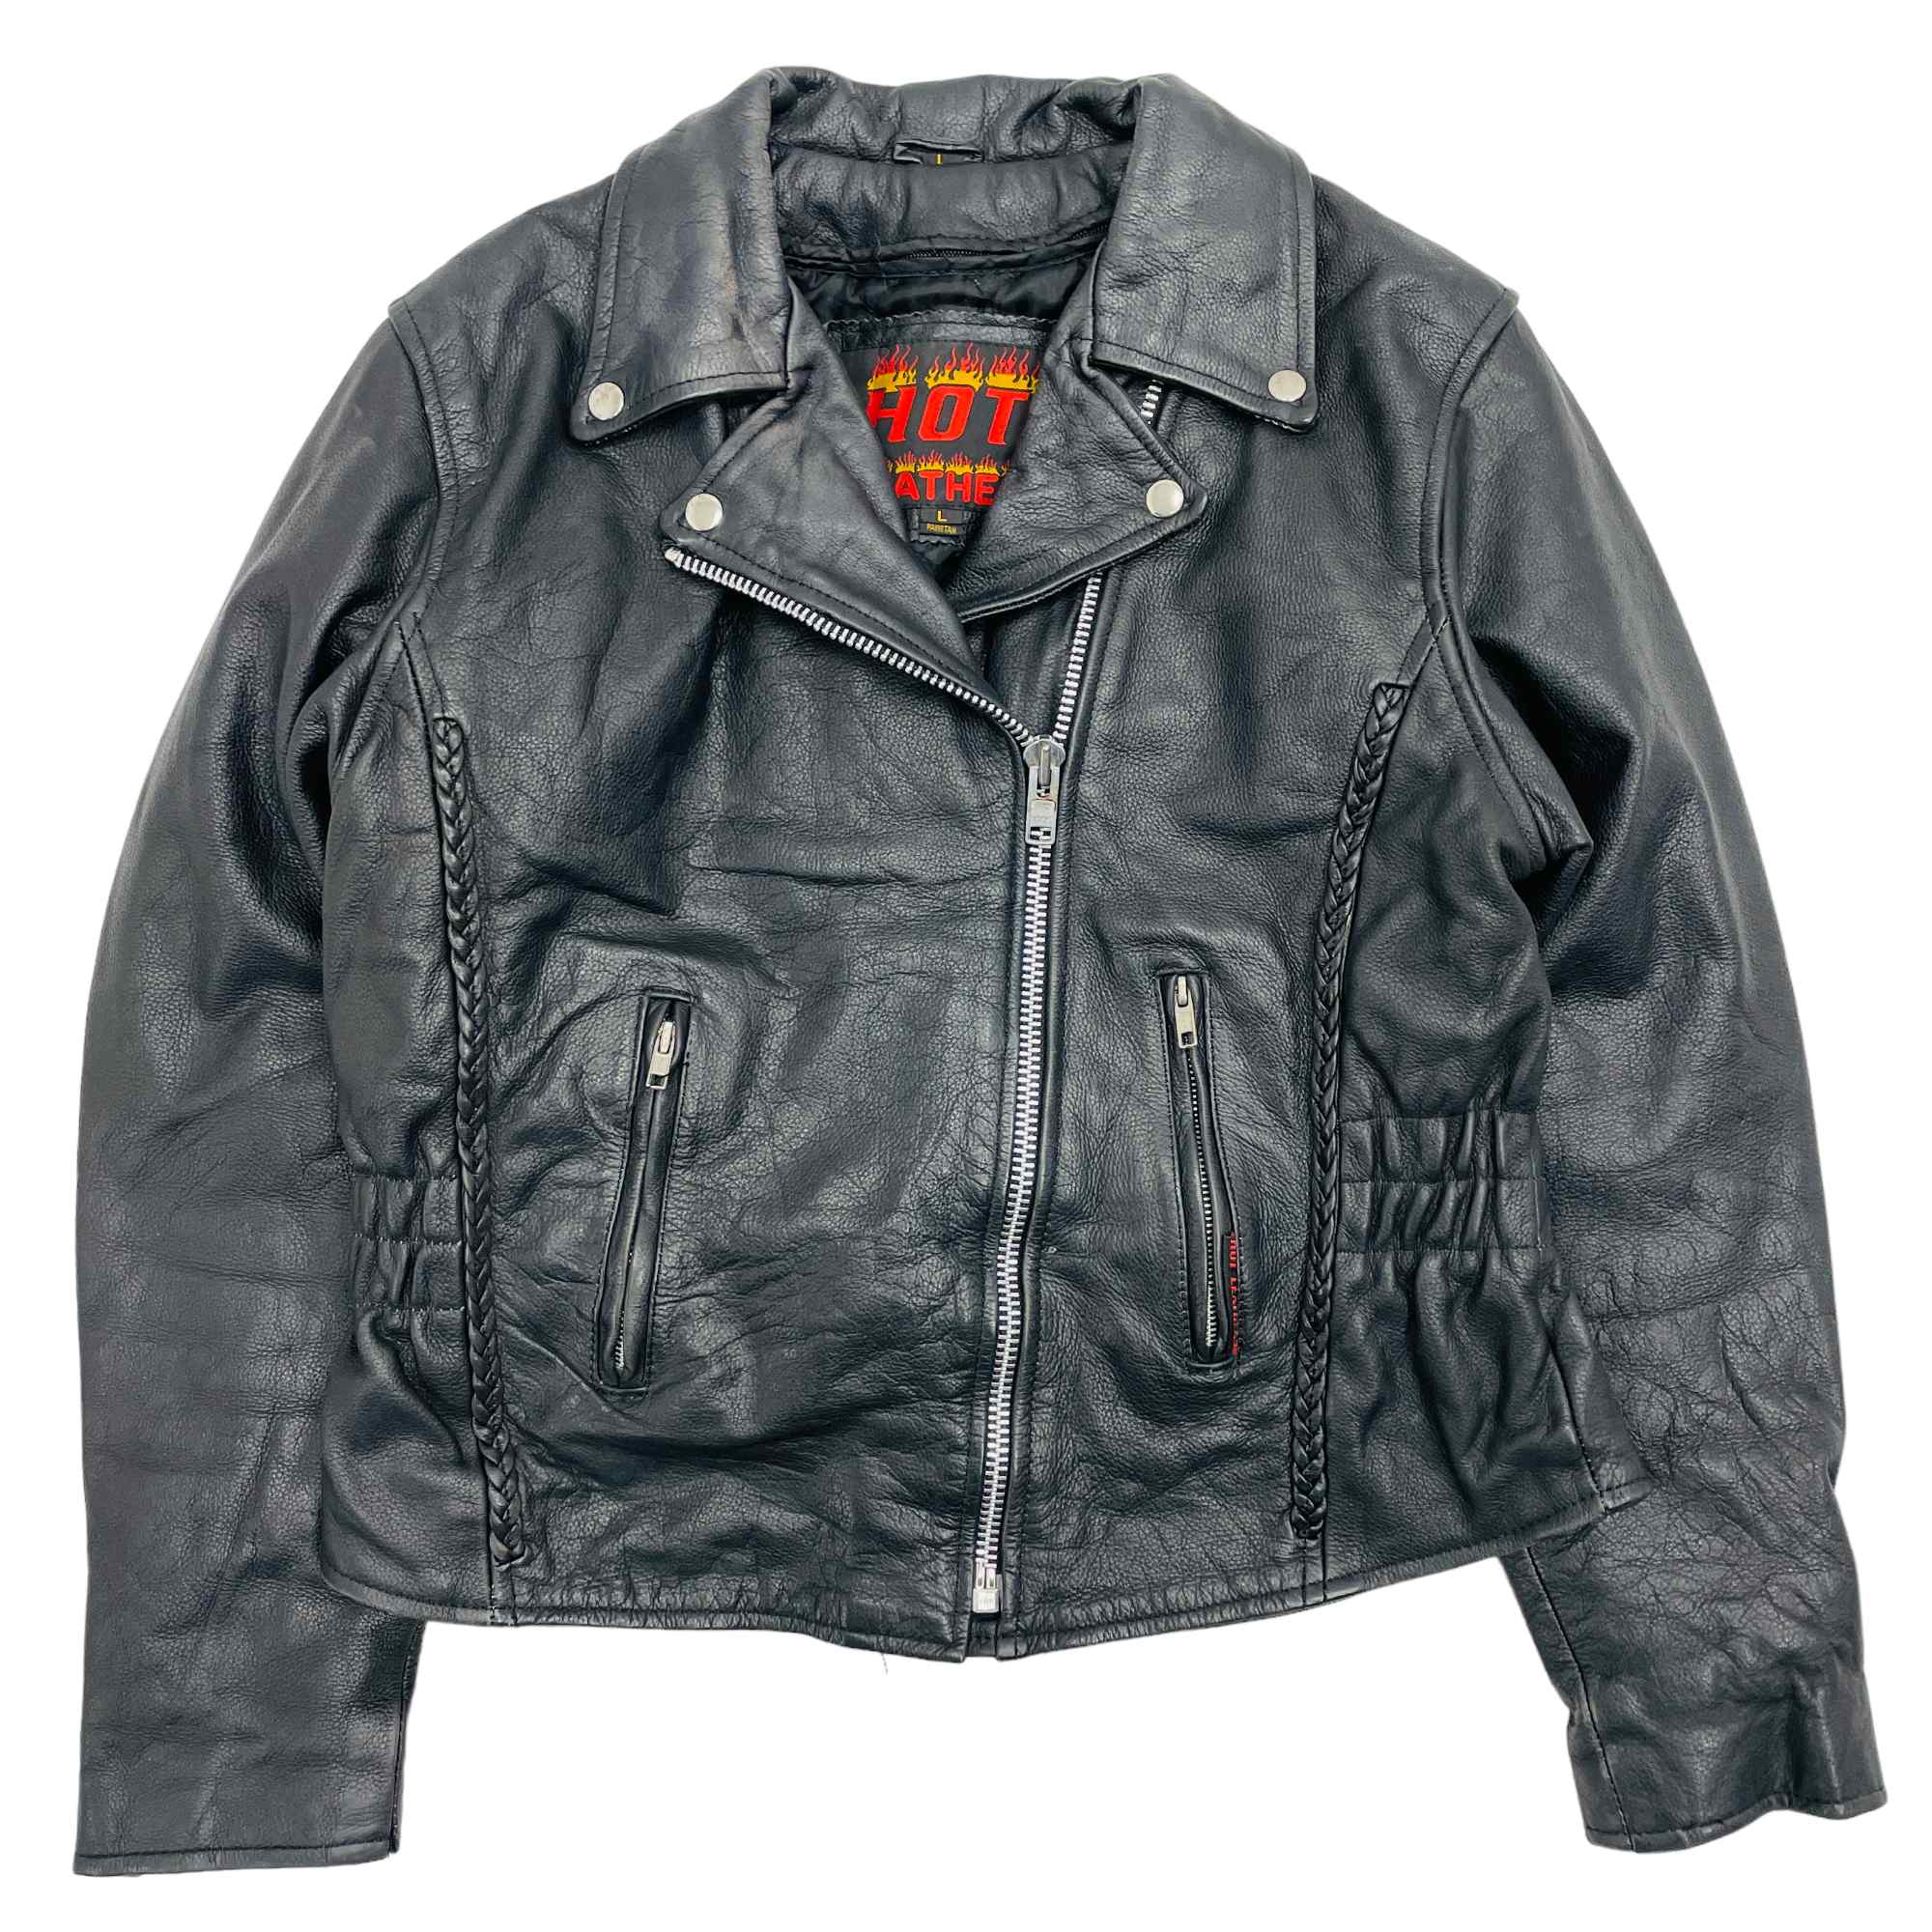 Collared Leather Biker Jacket - Large